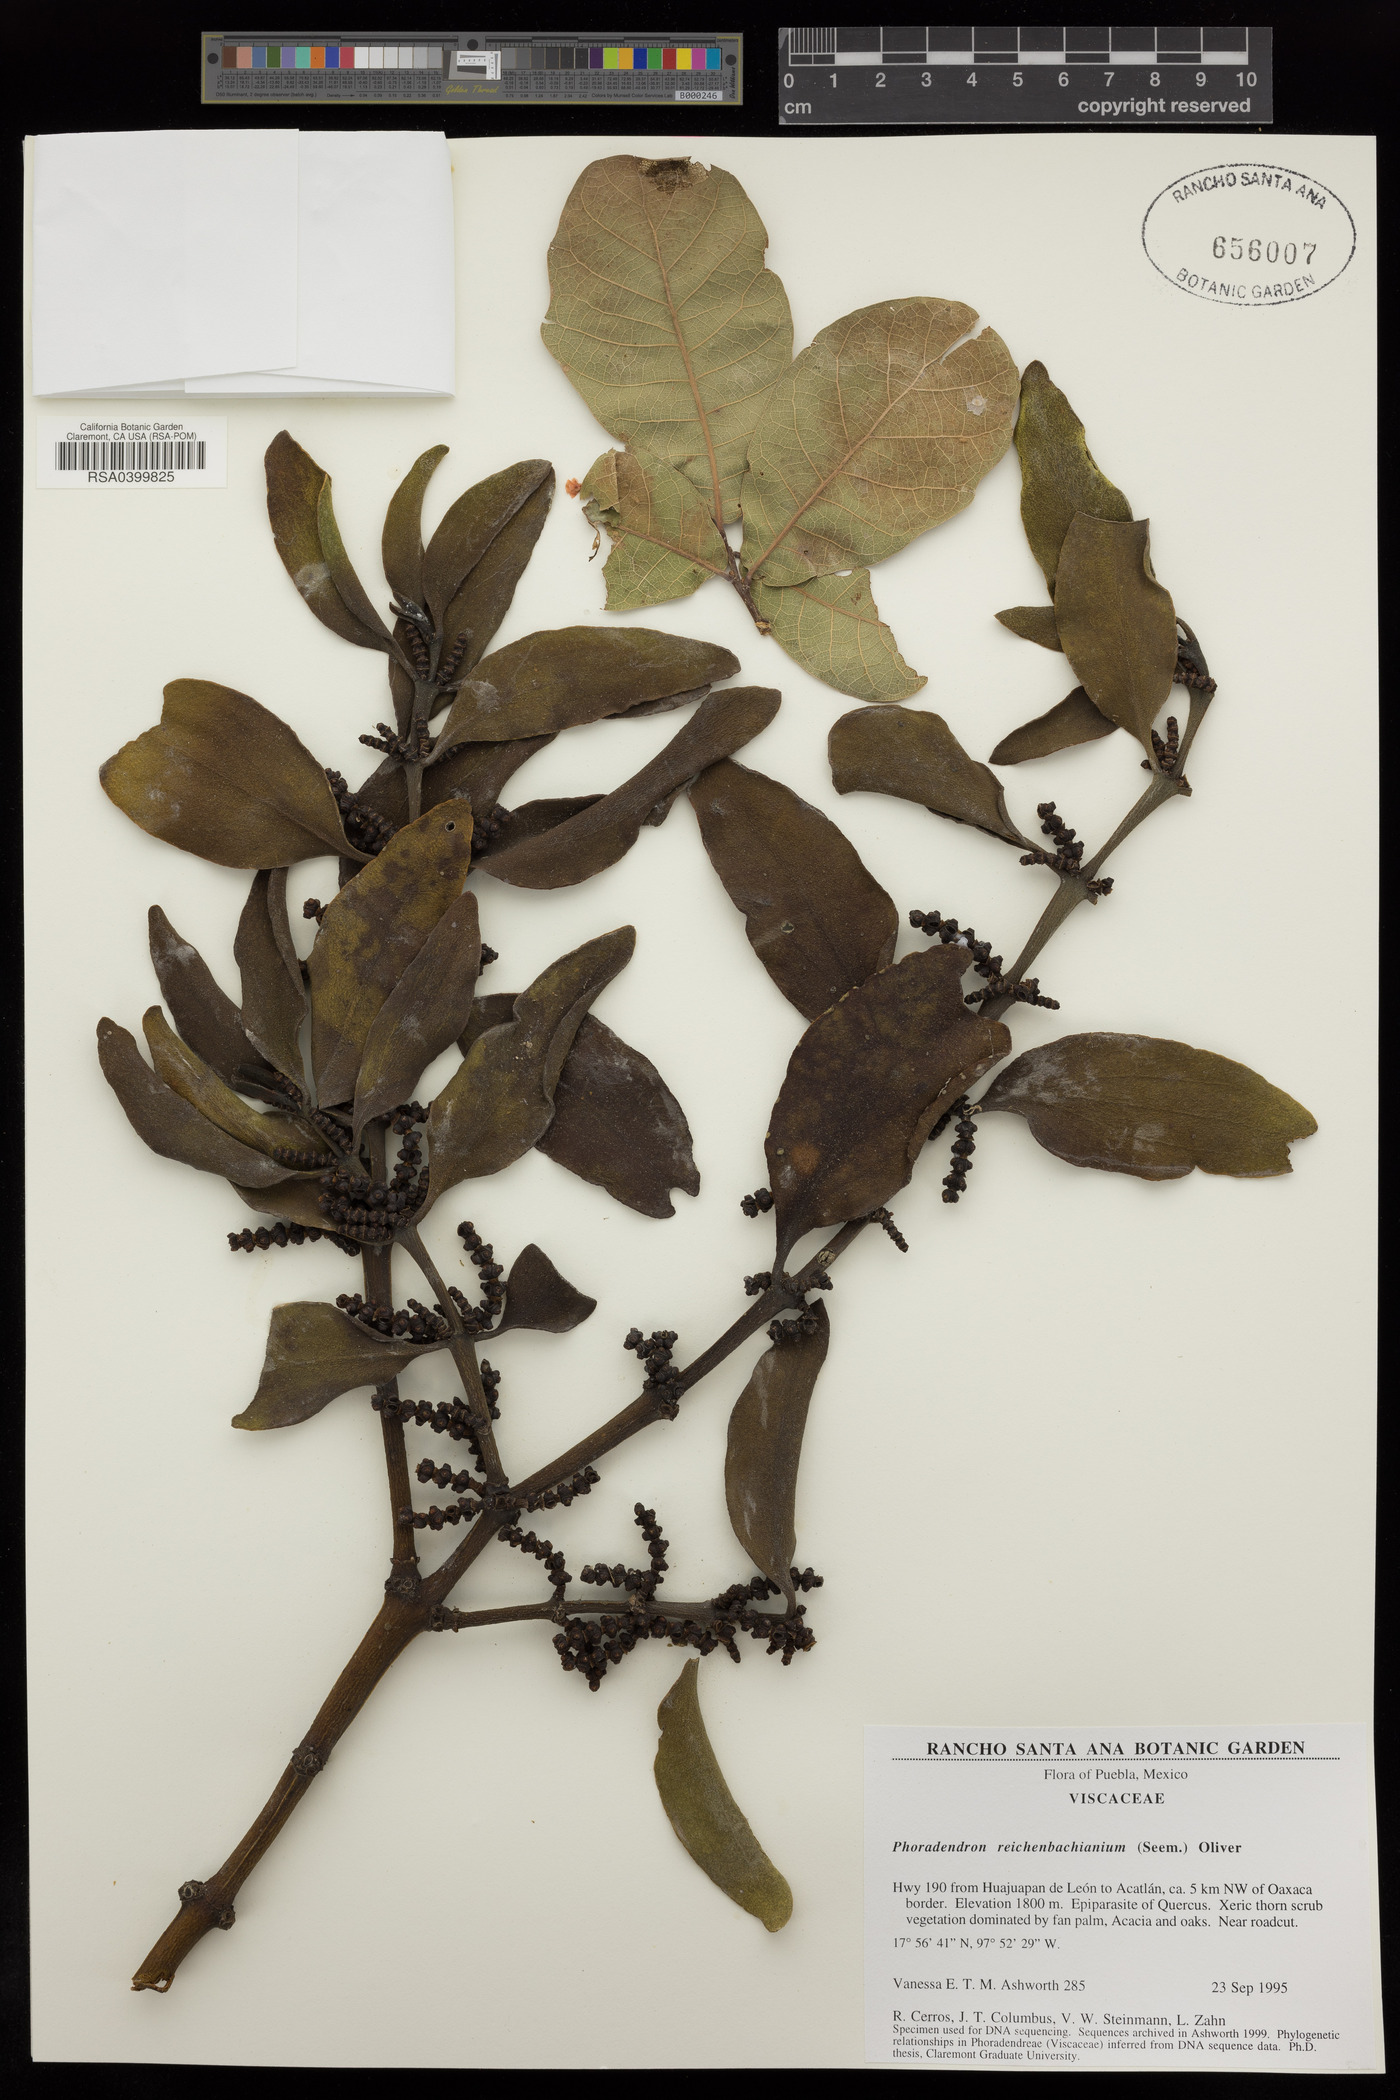 Phoradendron reichenbachianum image